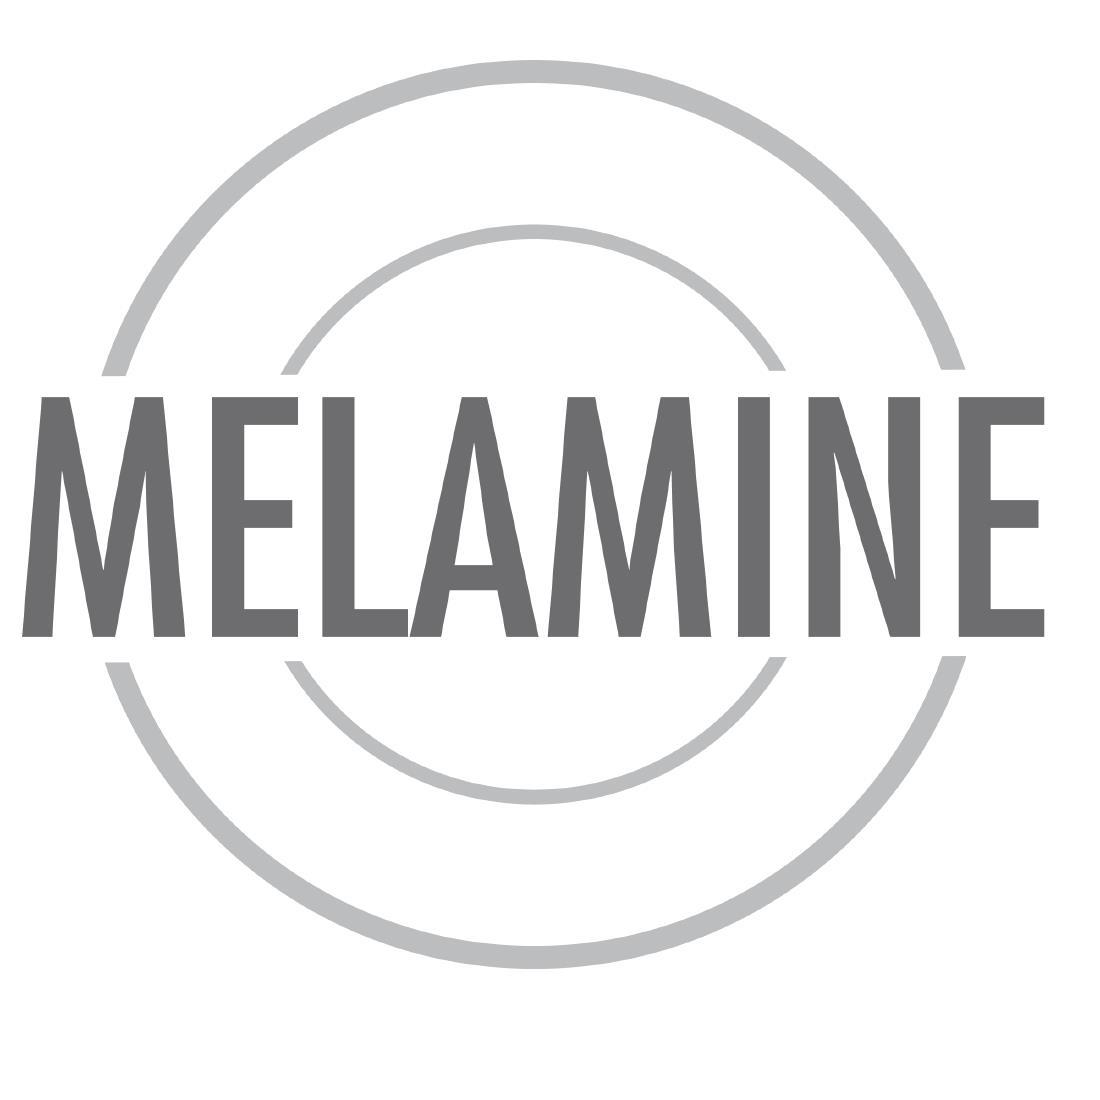 Olympia Kristallon Melamine Fluted Ramekins Black 57mm (Pack of 12) - DM162  - 2